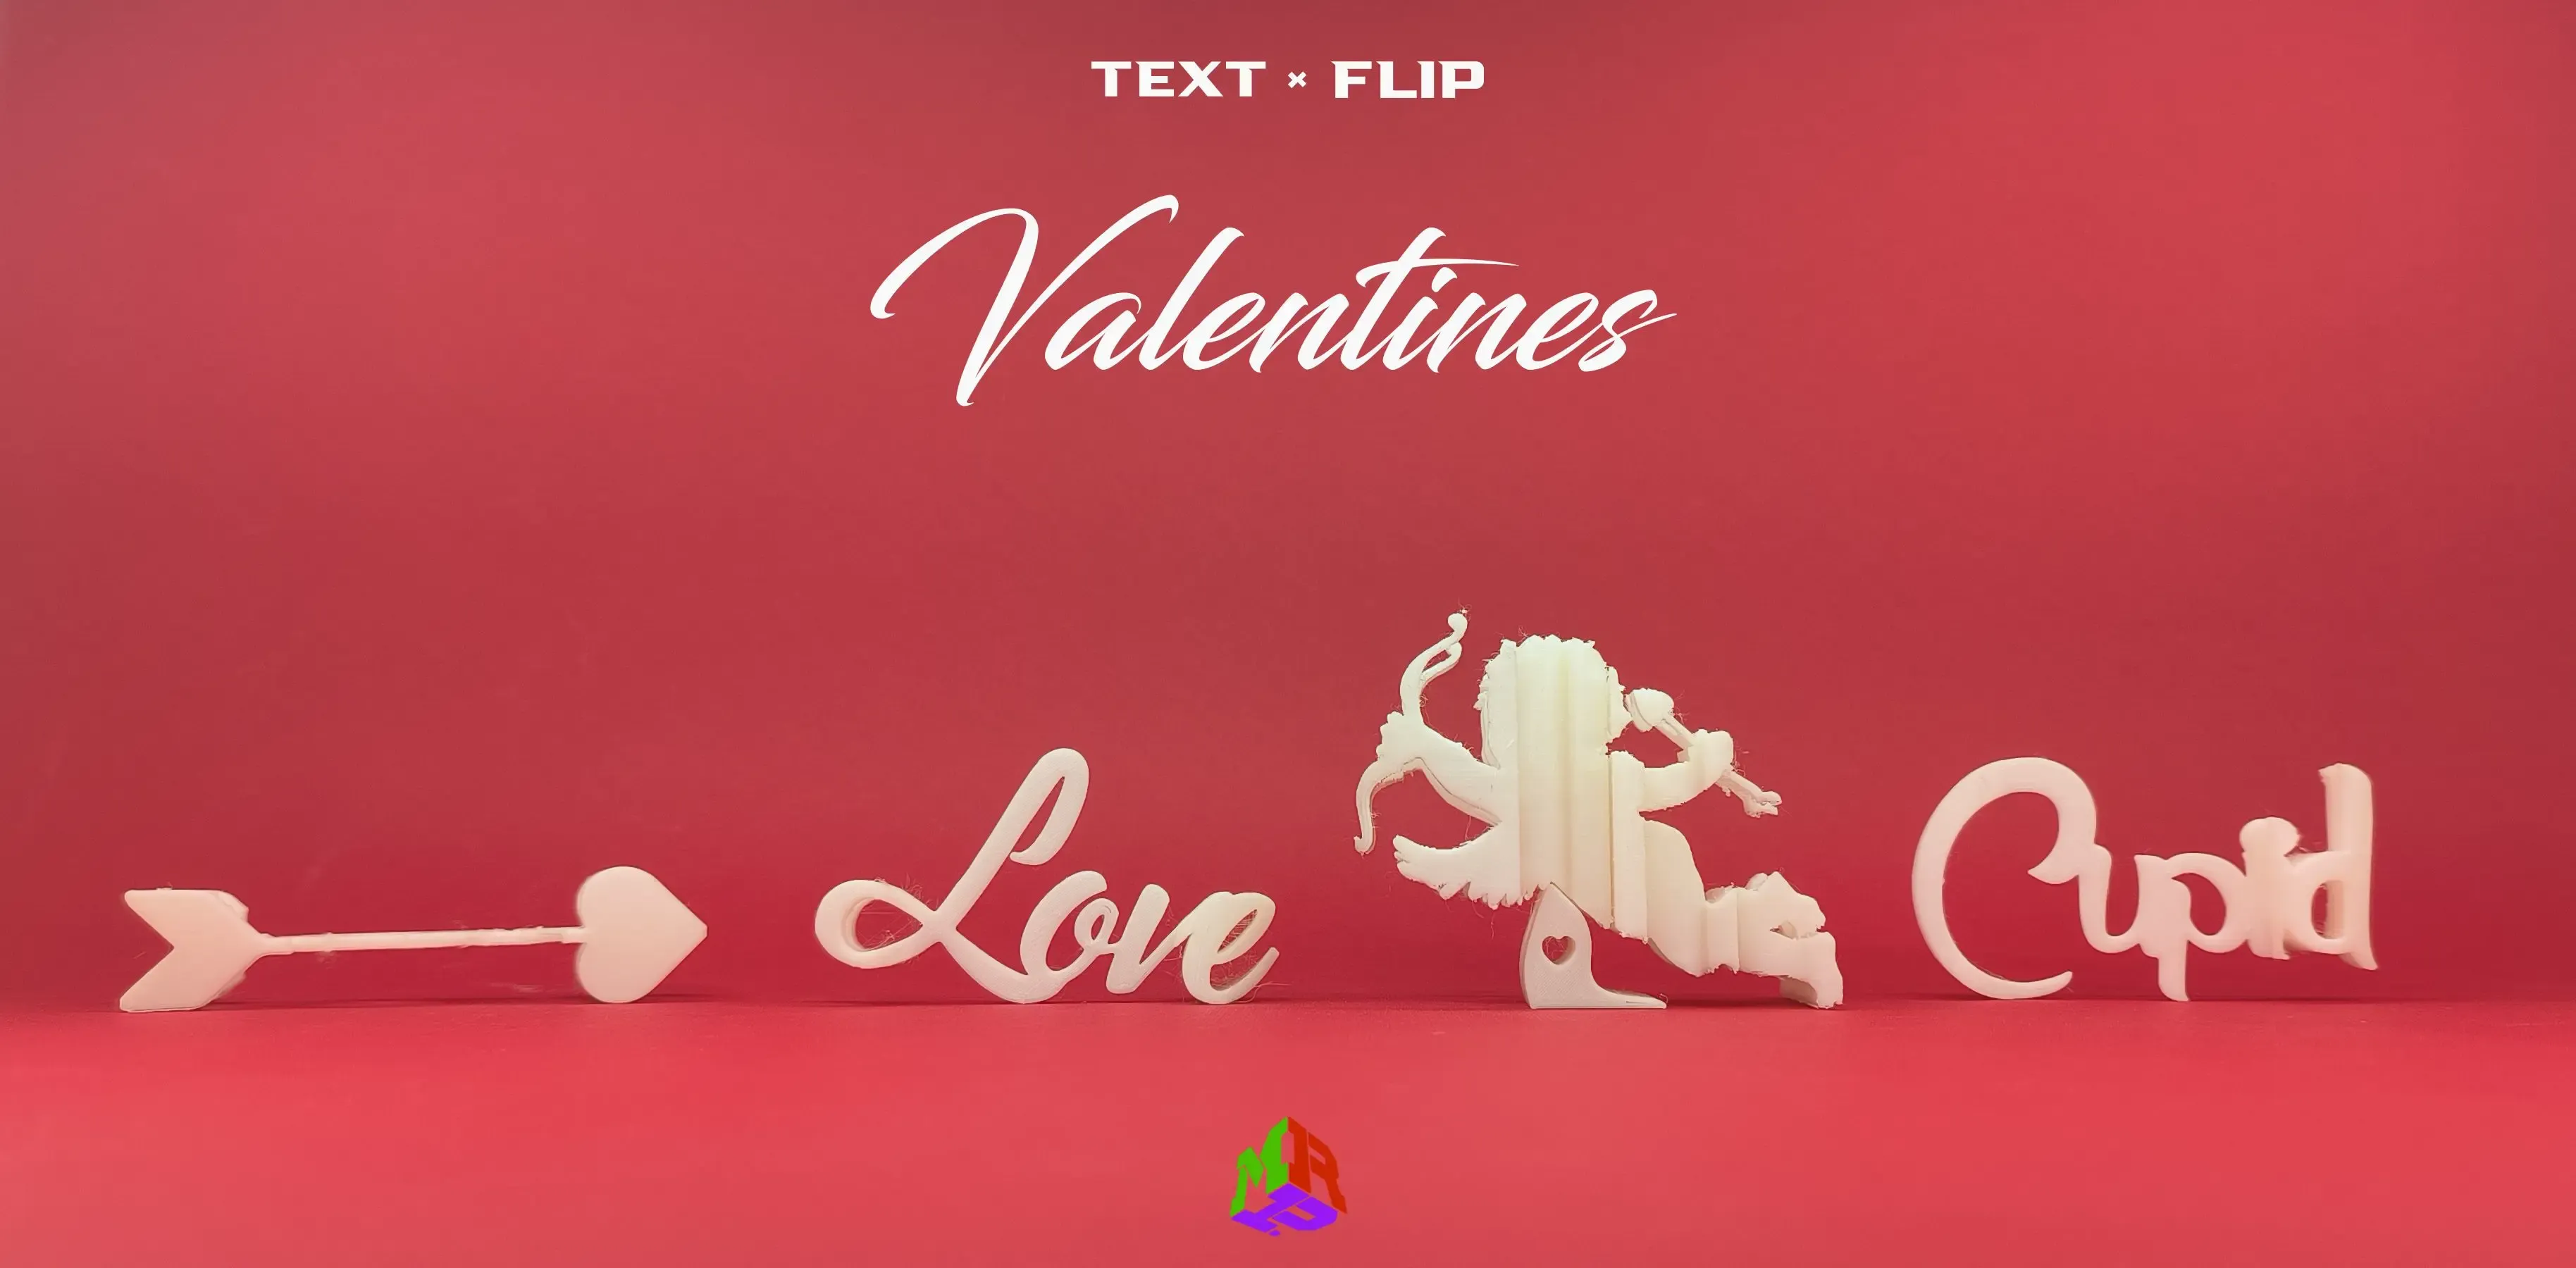 Text Flip - Love Arrow